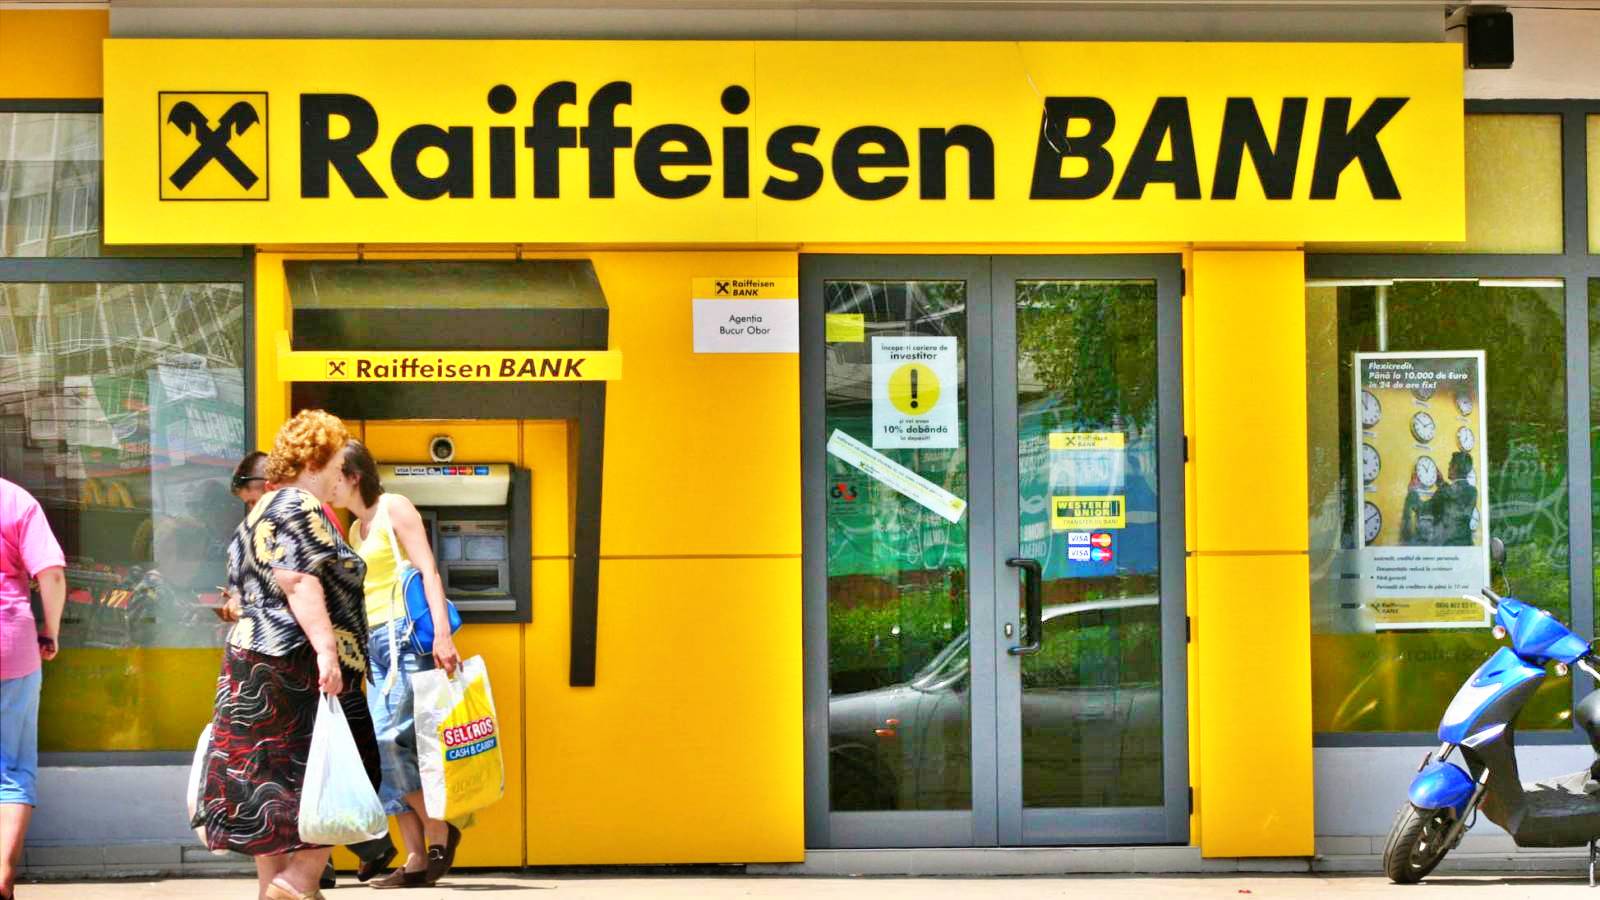 Raiffeisen Bank Avviso IMPORTANTE per TUTTI i Rumeni dell'intero Paese